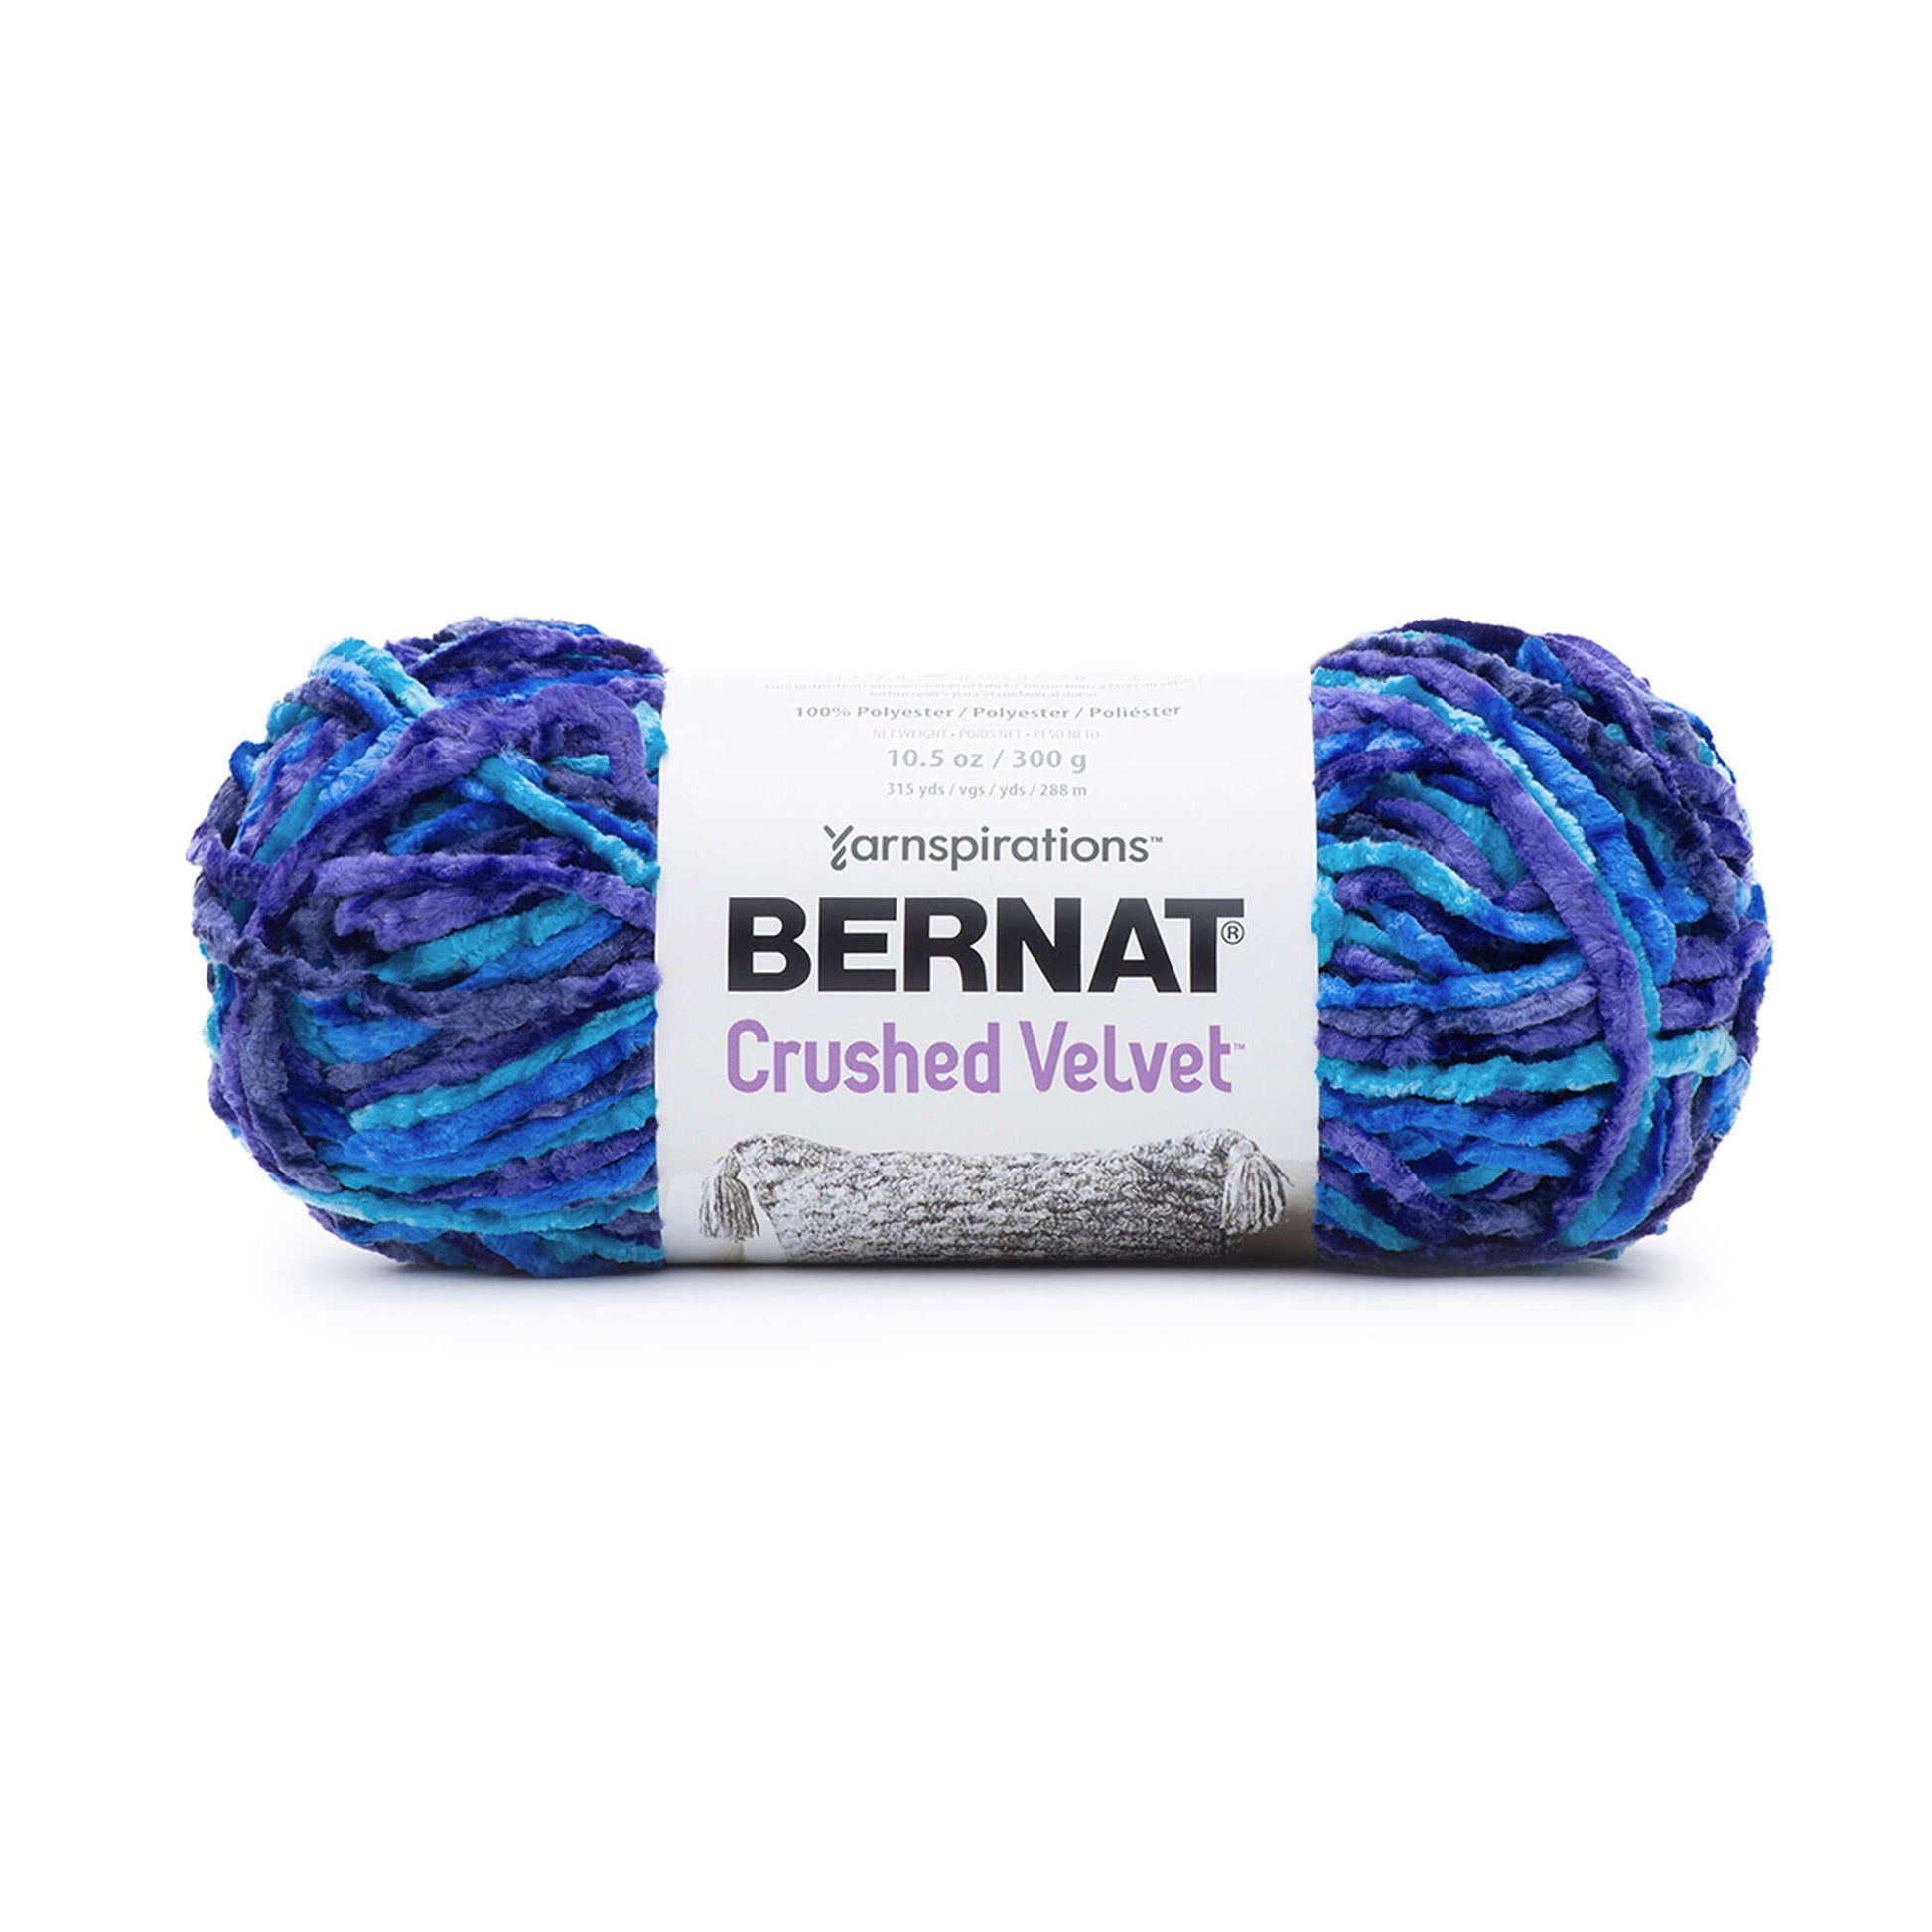 Bernat Crushed Velvet Yarn - Clearance Shades